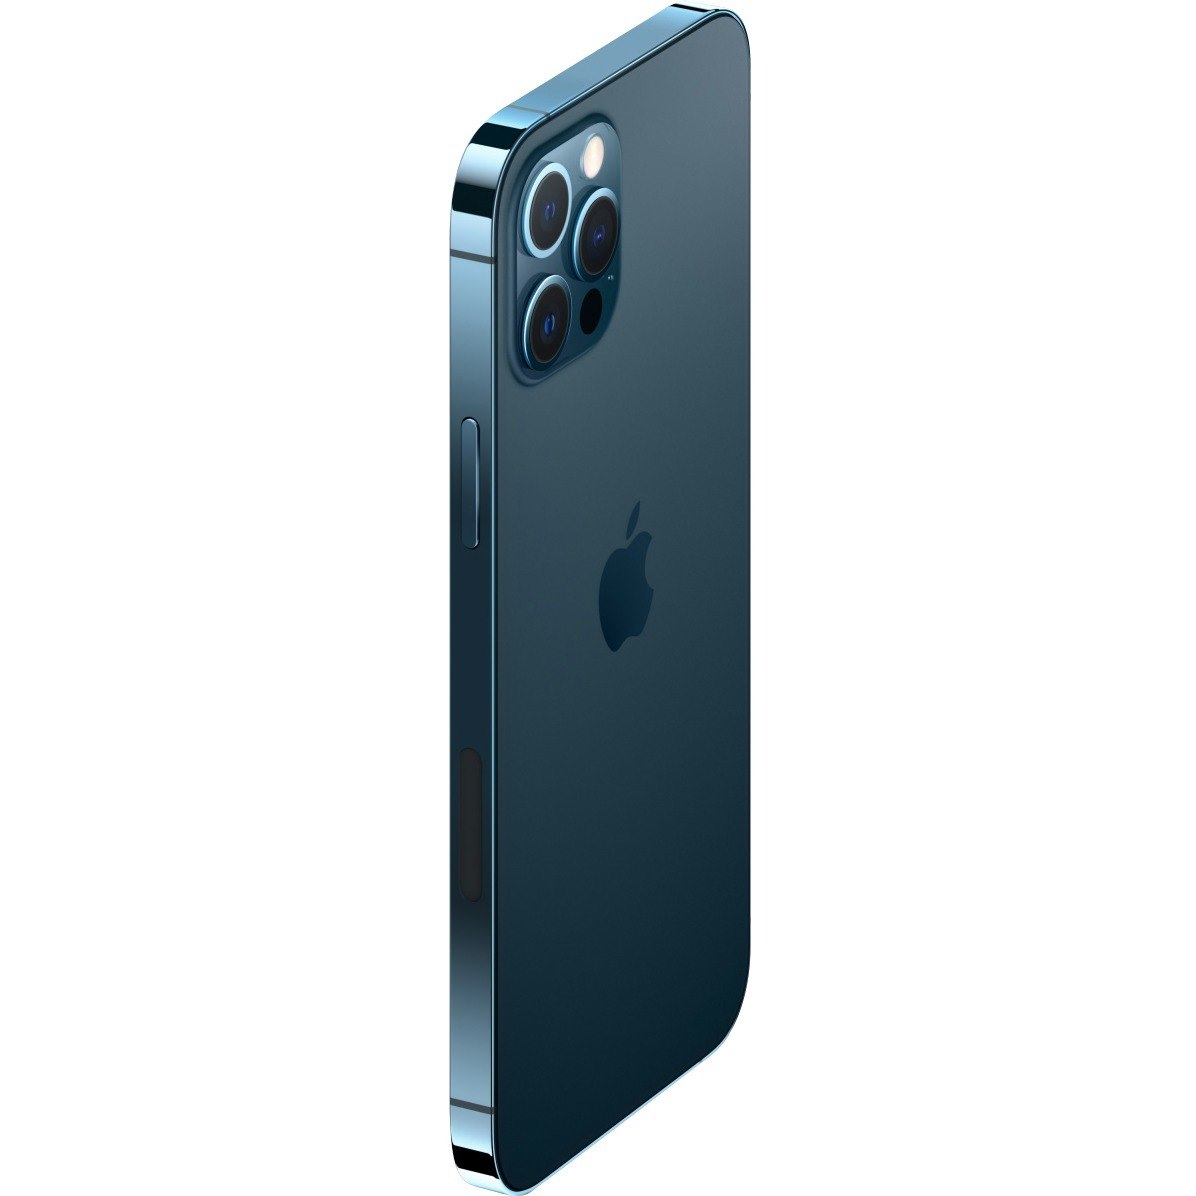 Apple iPhone 12 Pro A2341 512 GB Smartphone - 6.1" OLED 2532 x 1170 - Hexa-core (6 Core) - 6 GB RAM - iOS 14 - 5G - Pacific Blue